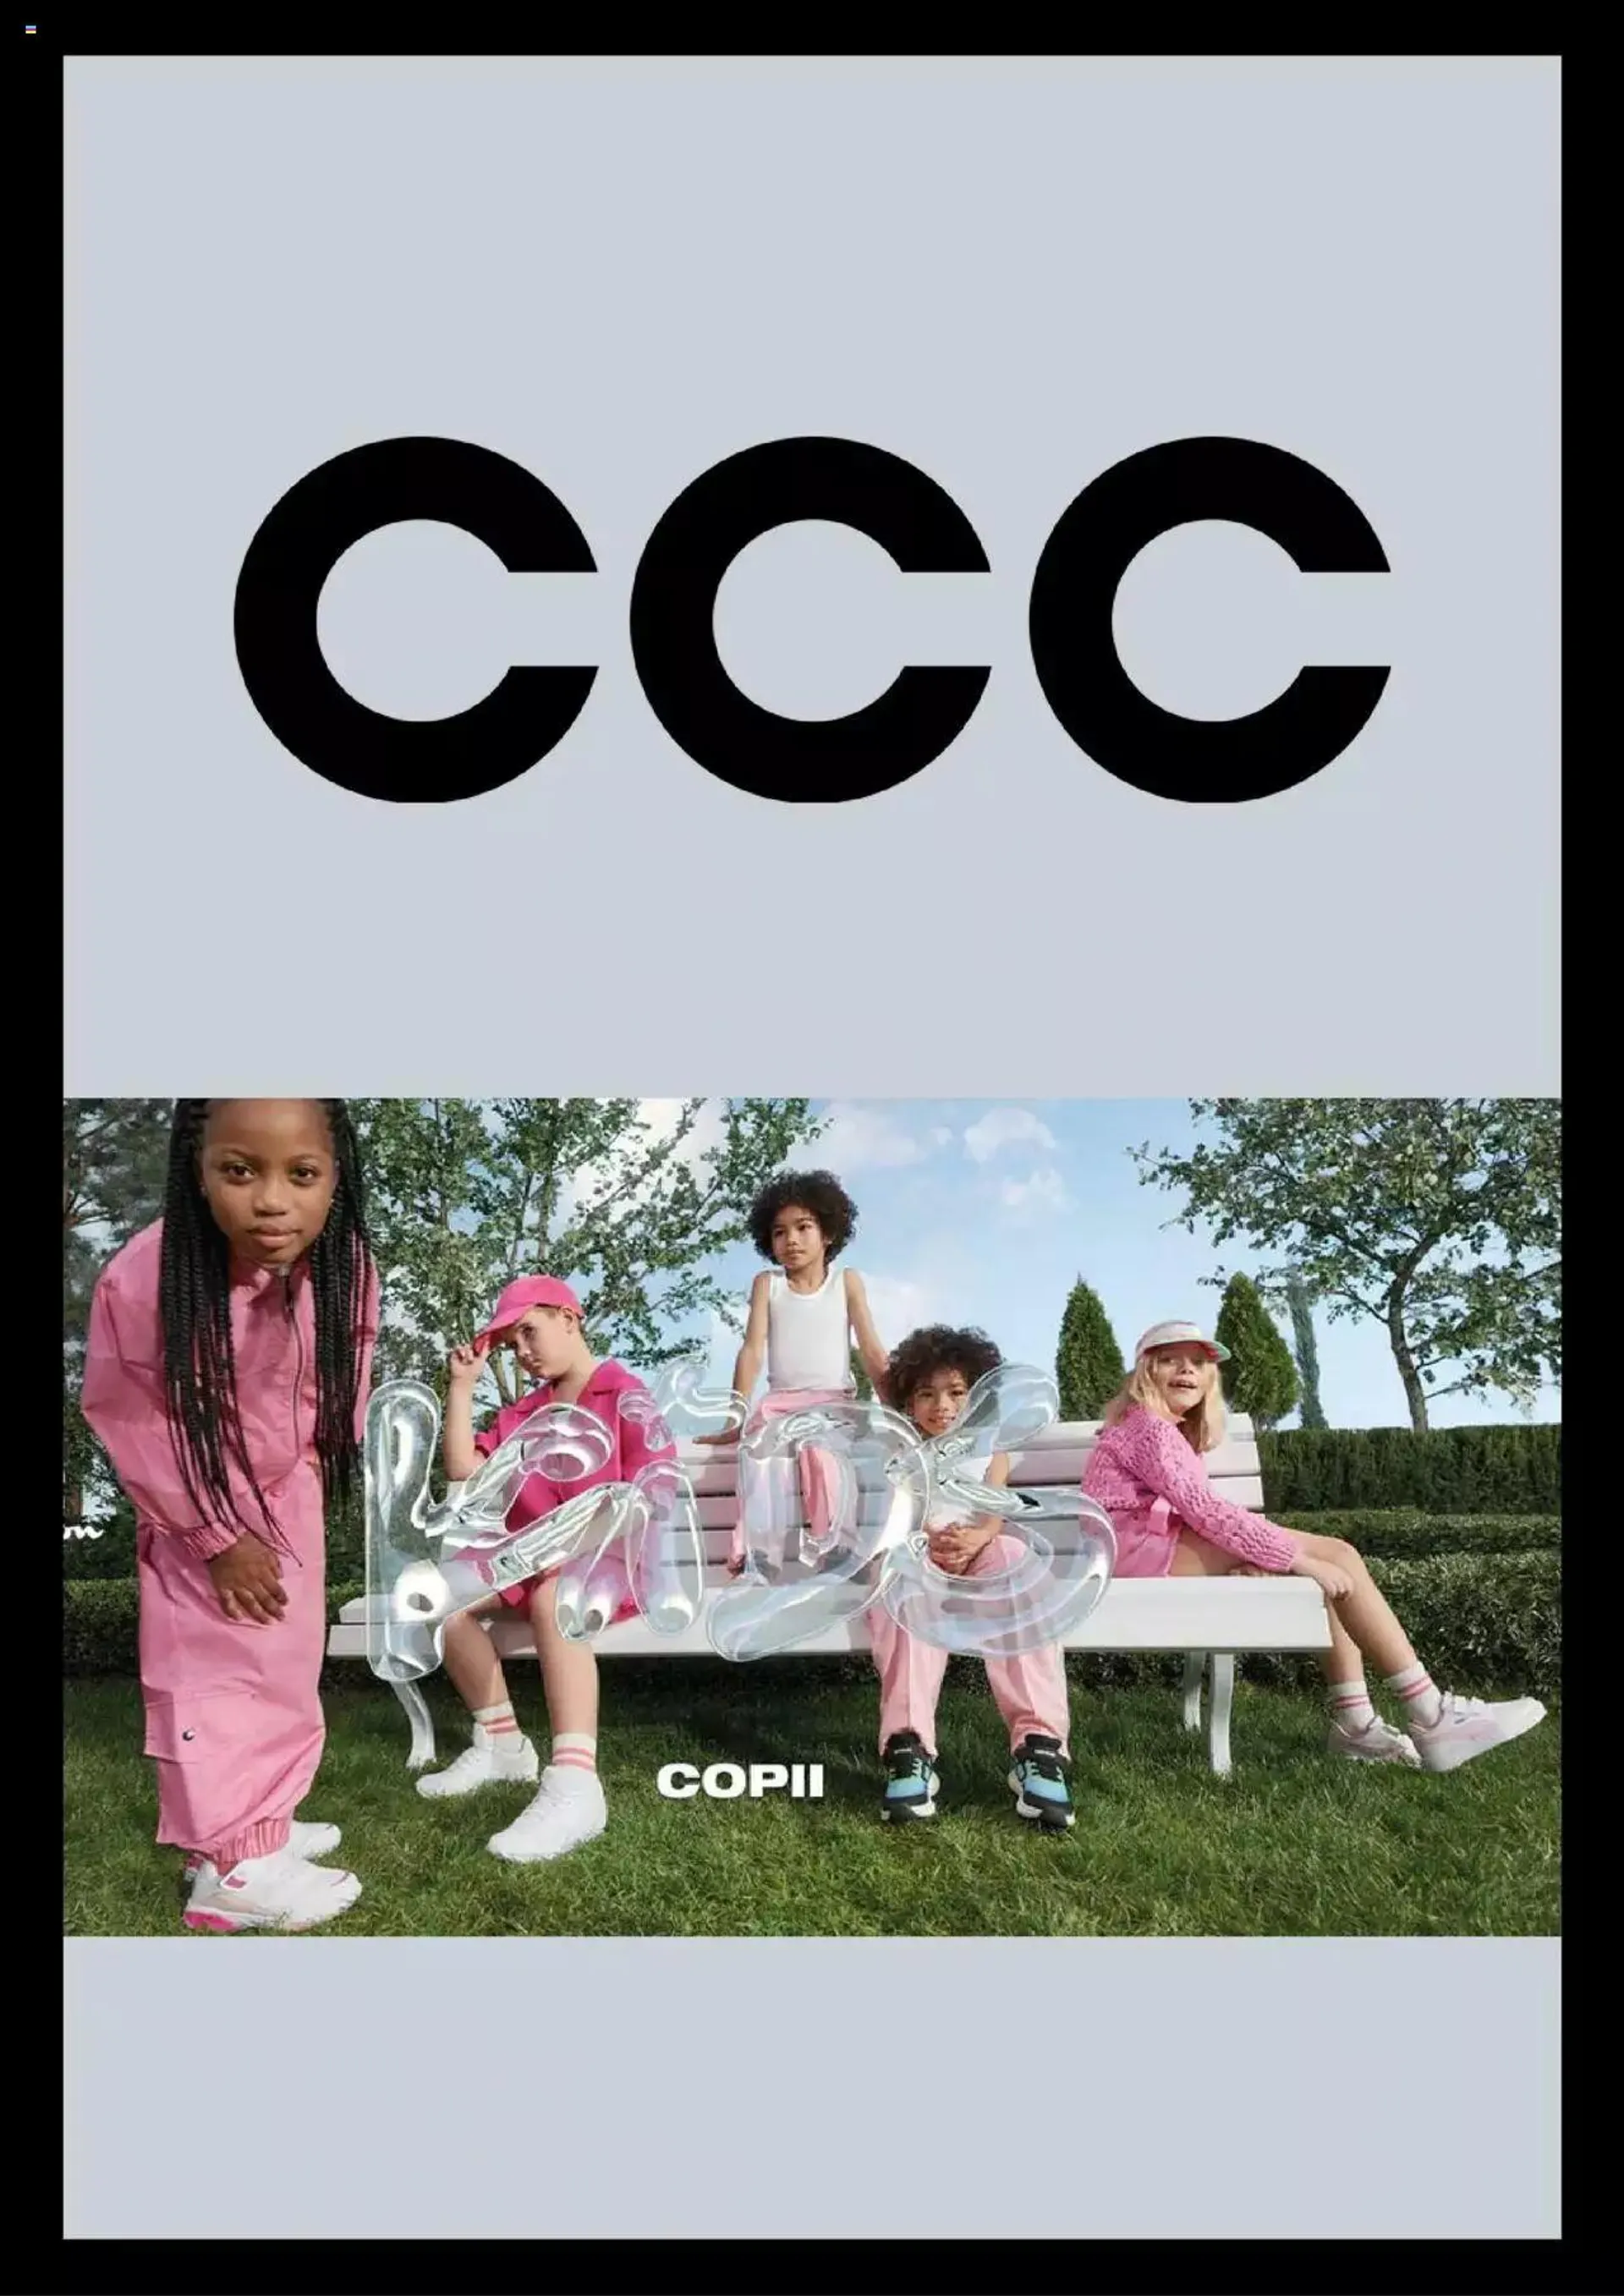 Catalog CCC